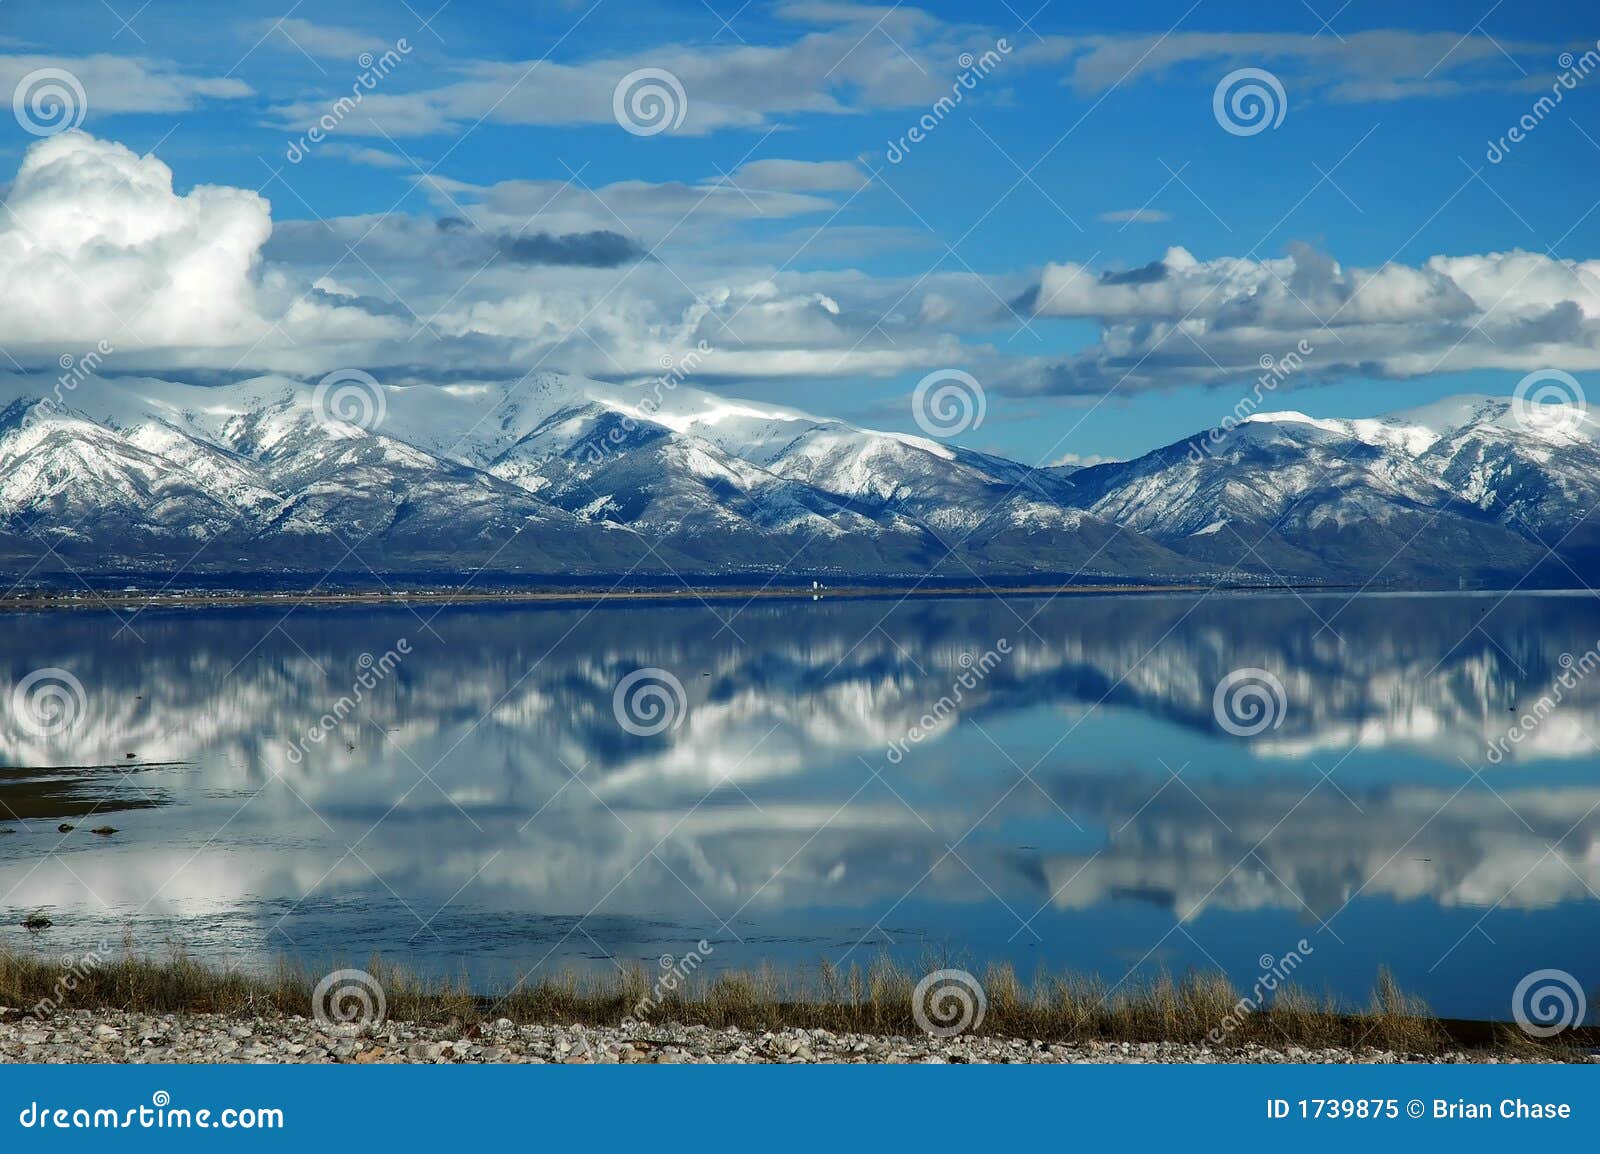 great salt lake